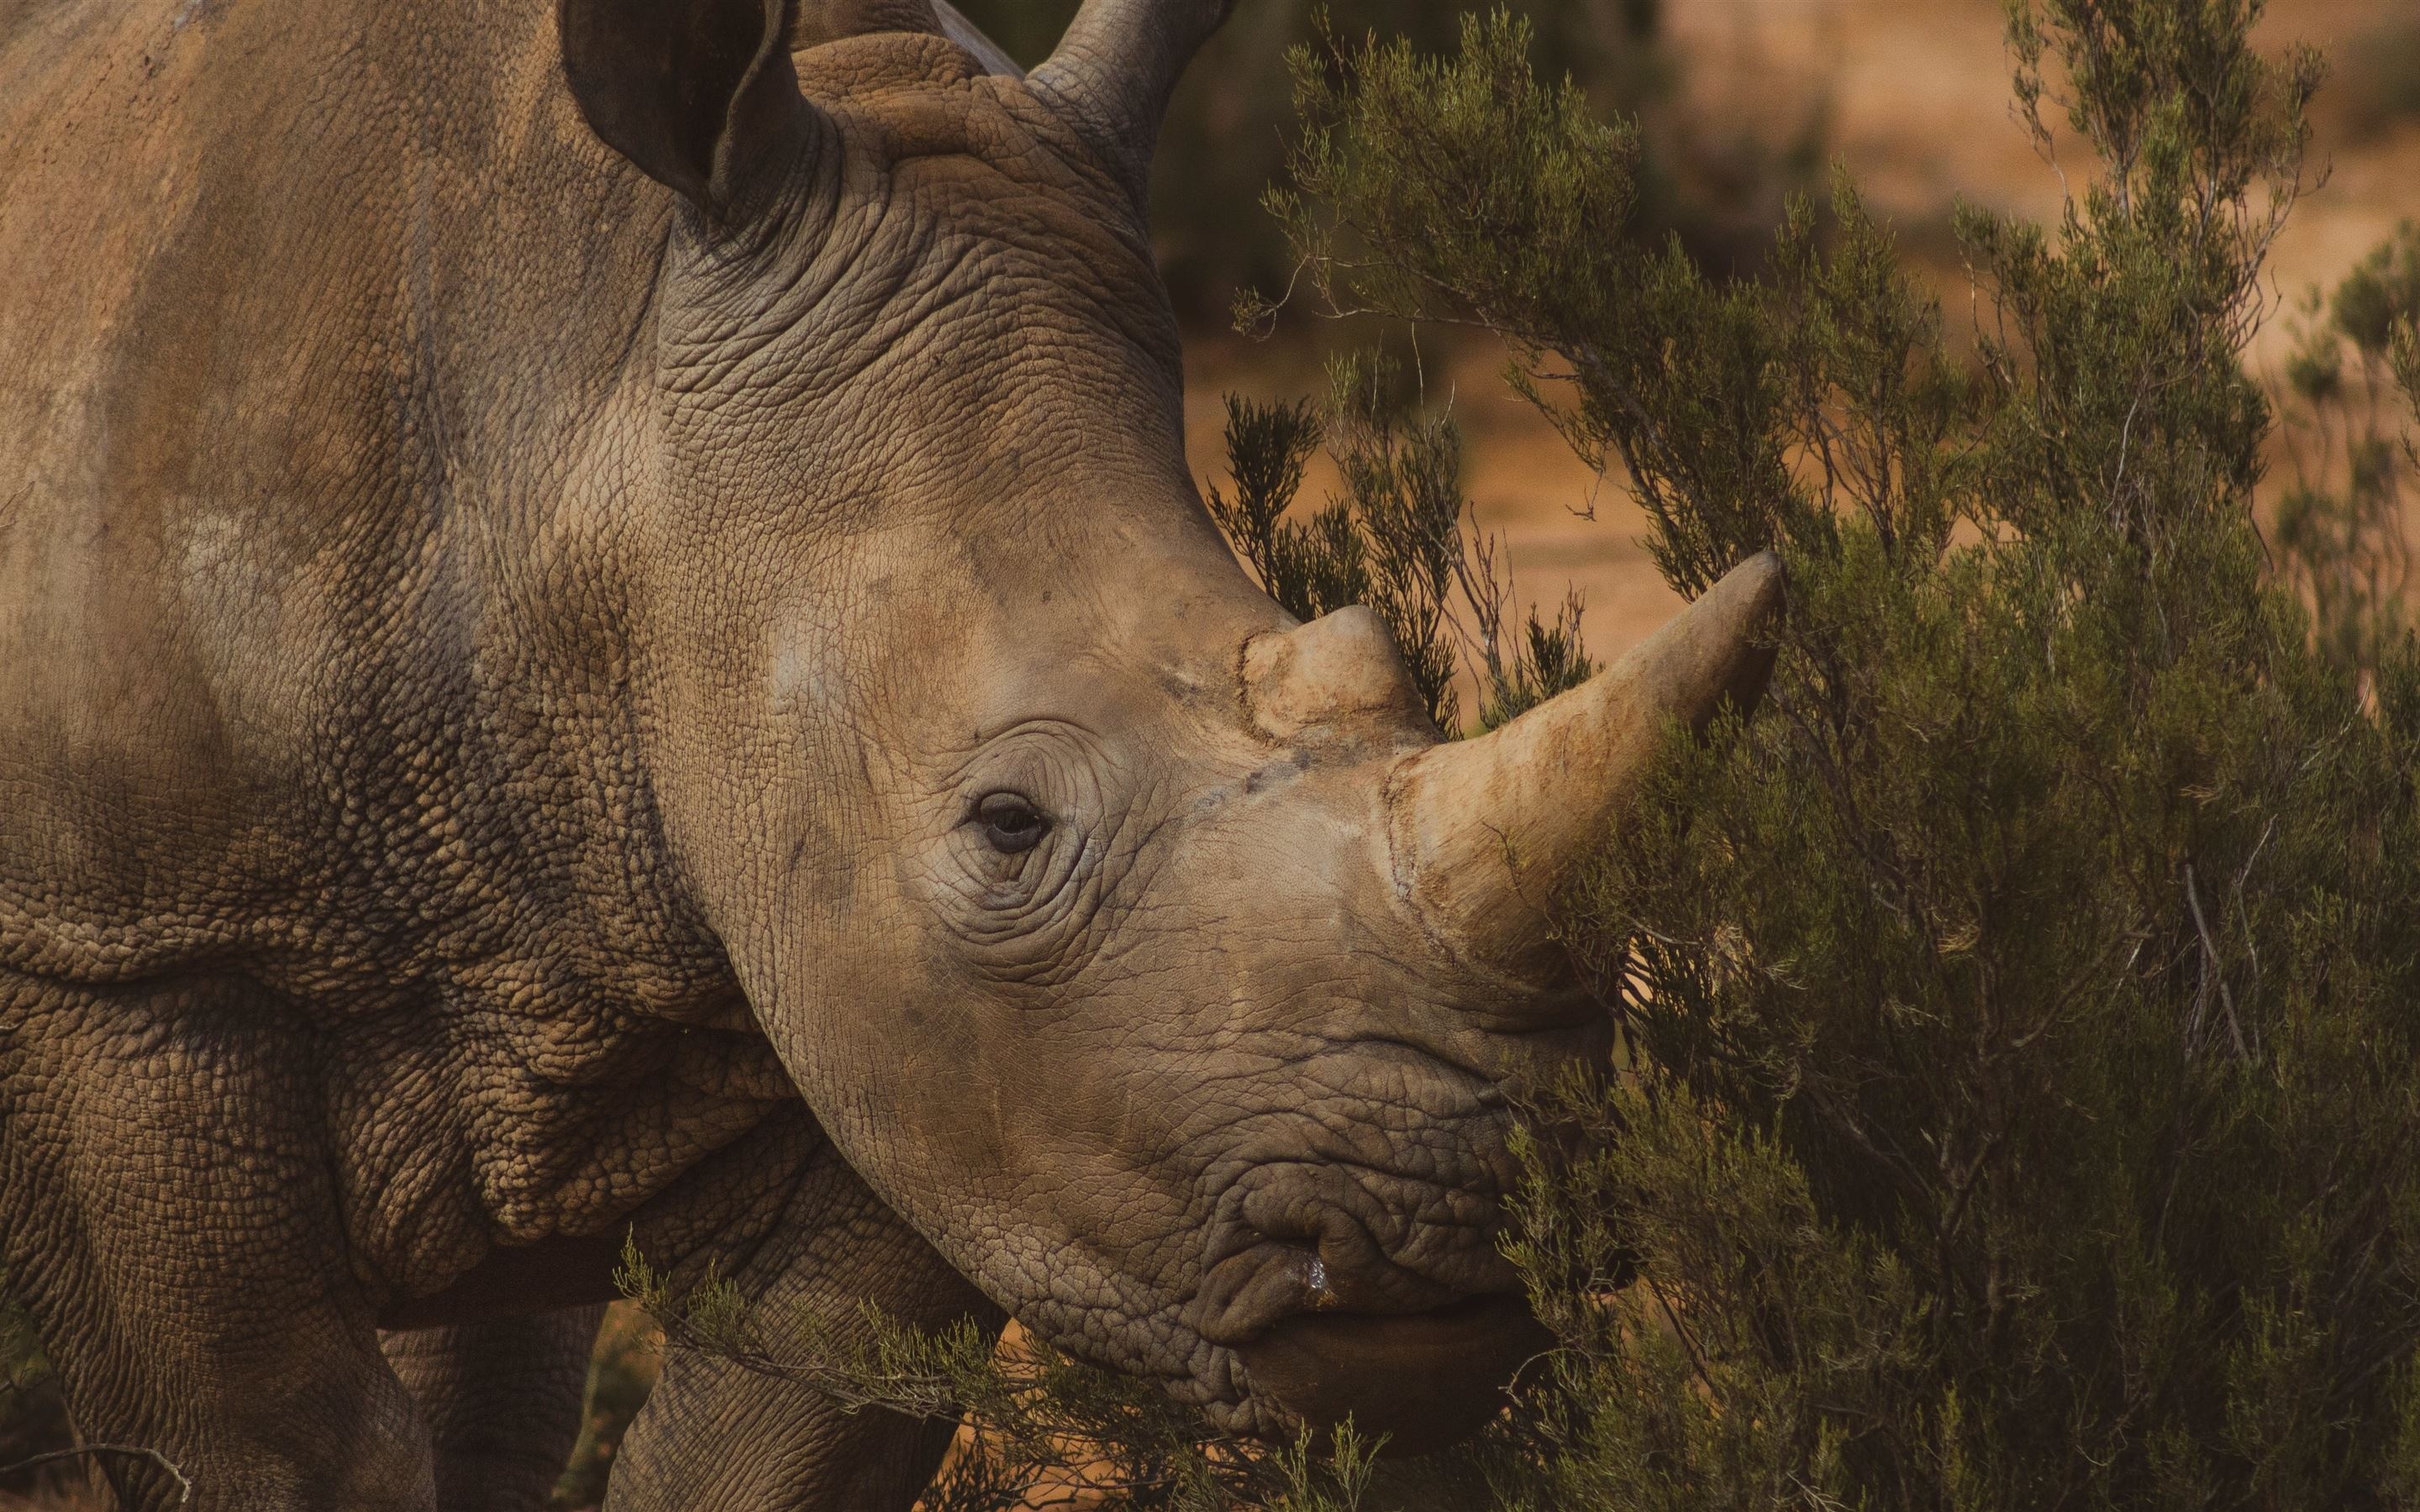 Brown rhino in grass, Serene grassland scene, Macbook air wallpaper download, Rhino in natural habitat, 2880x1800 HD Desktop